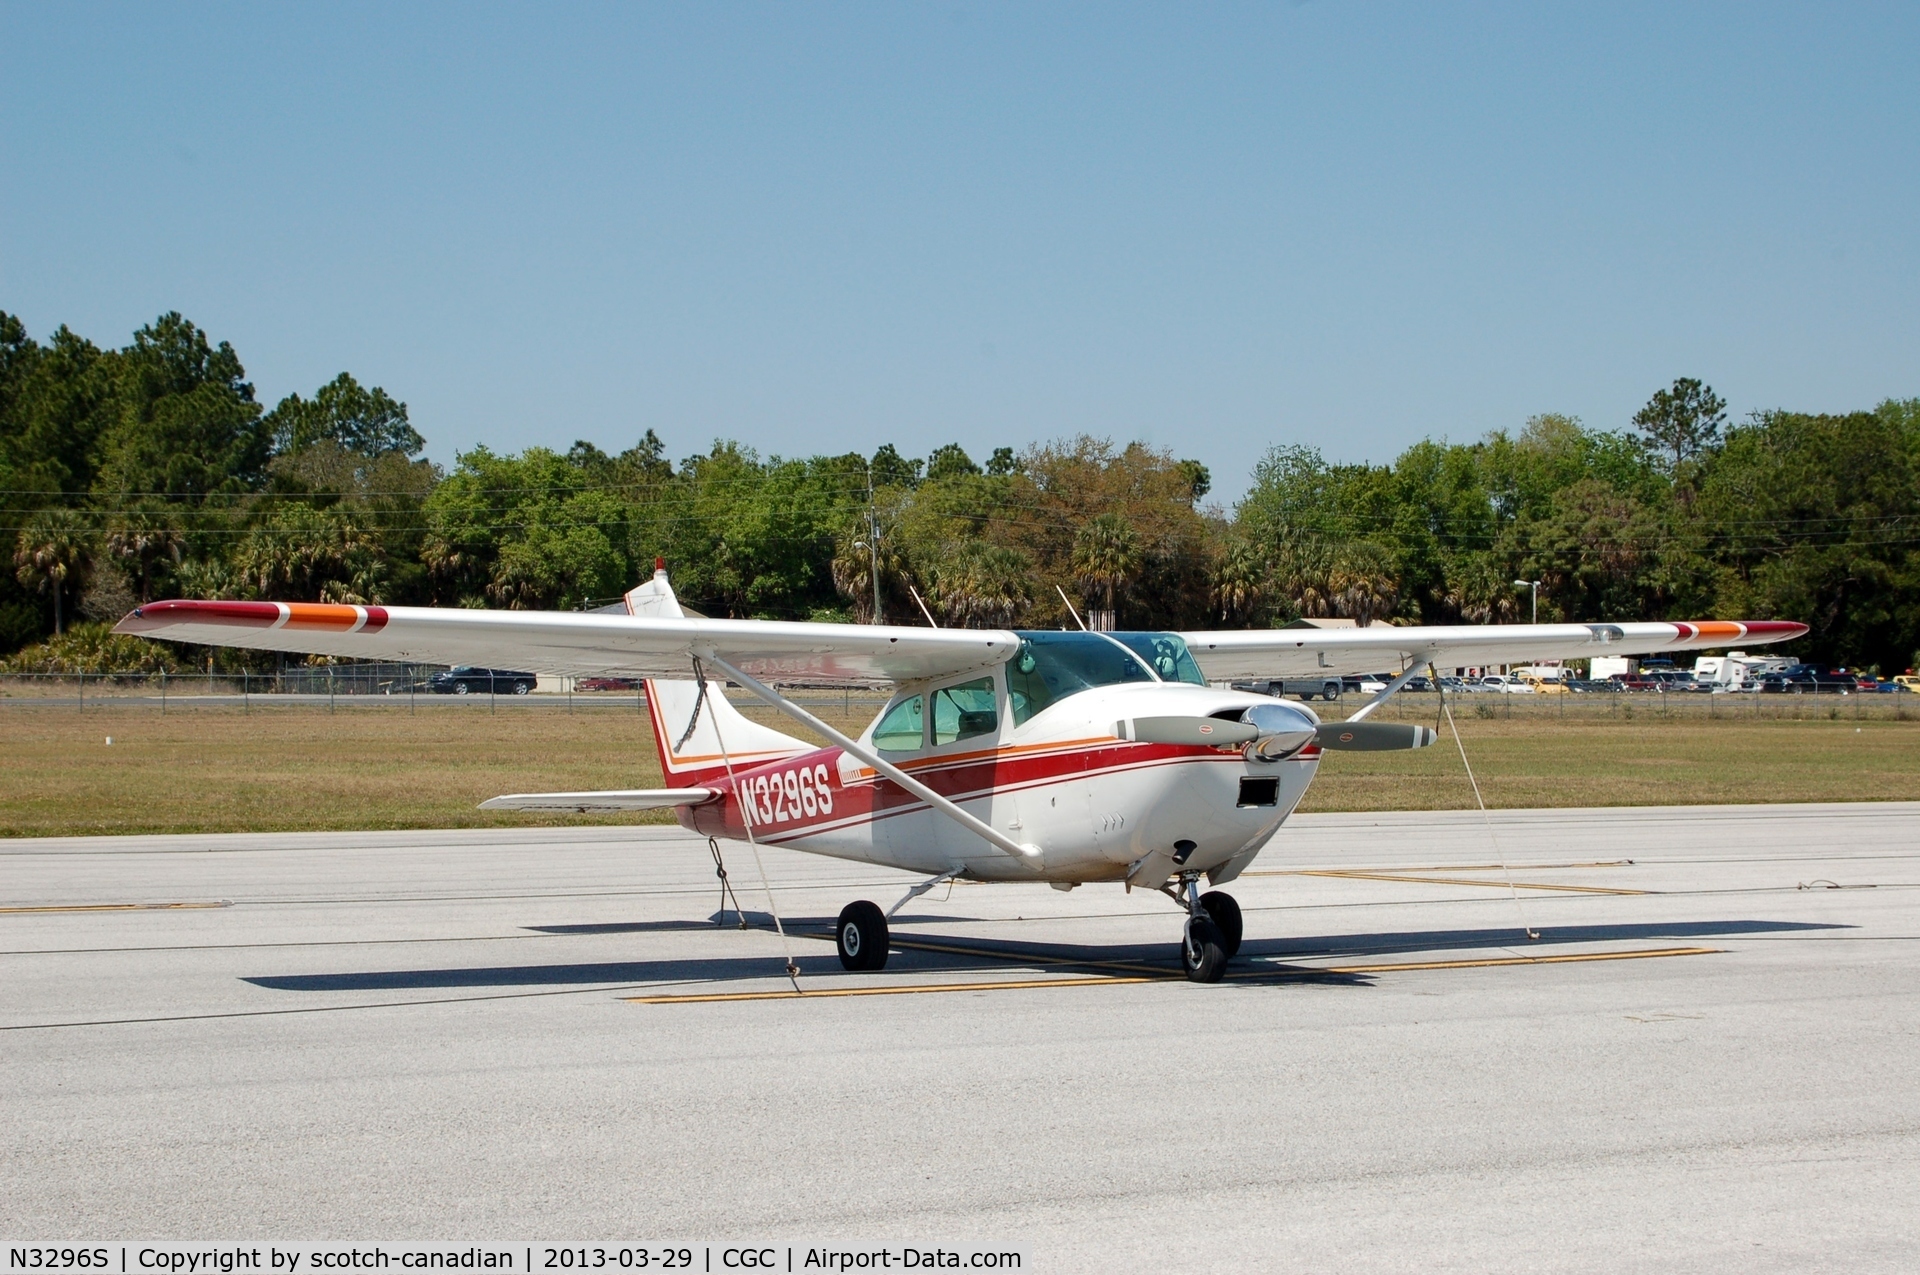 N3296S, 1964 Cessna 182G Skylane C/N 18255796, 1964 Cessna 182G, N3296S, at Crystal River Airport, Crystal River, FL